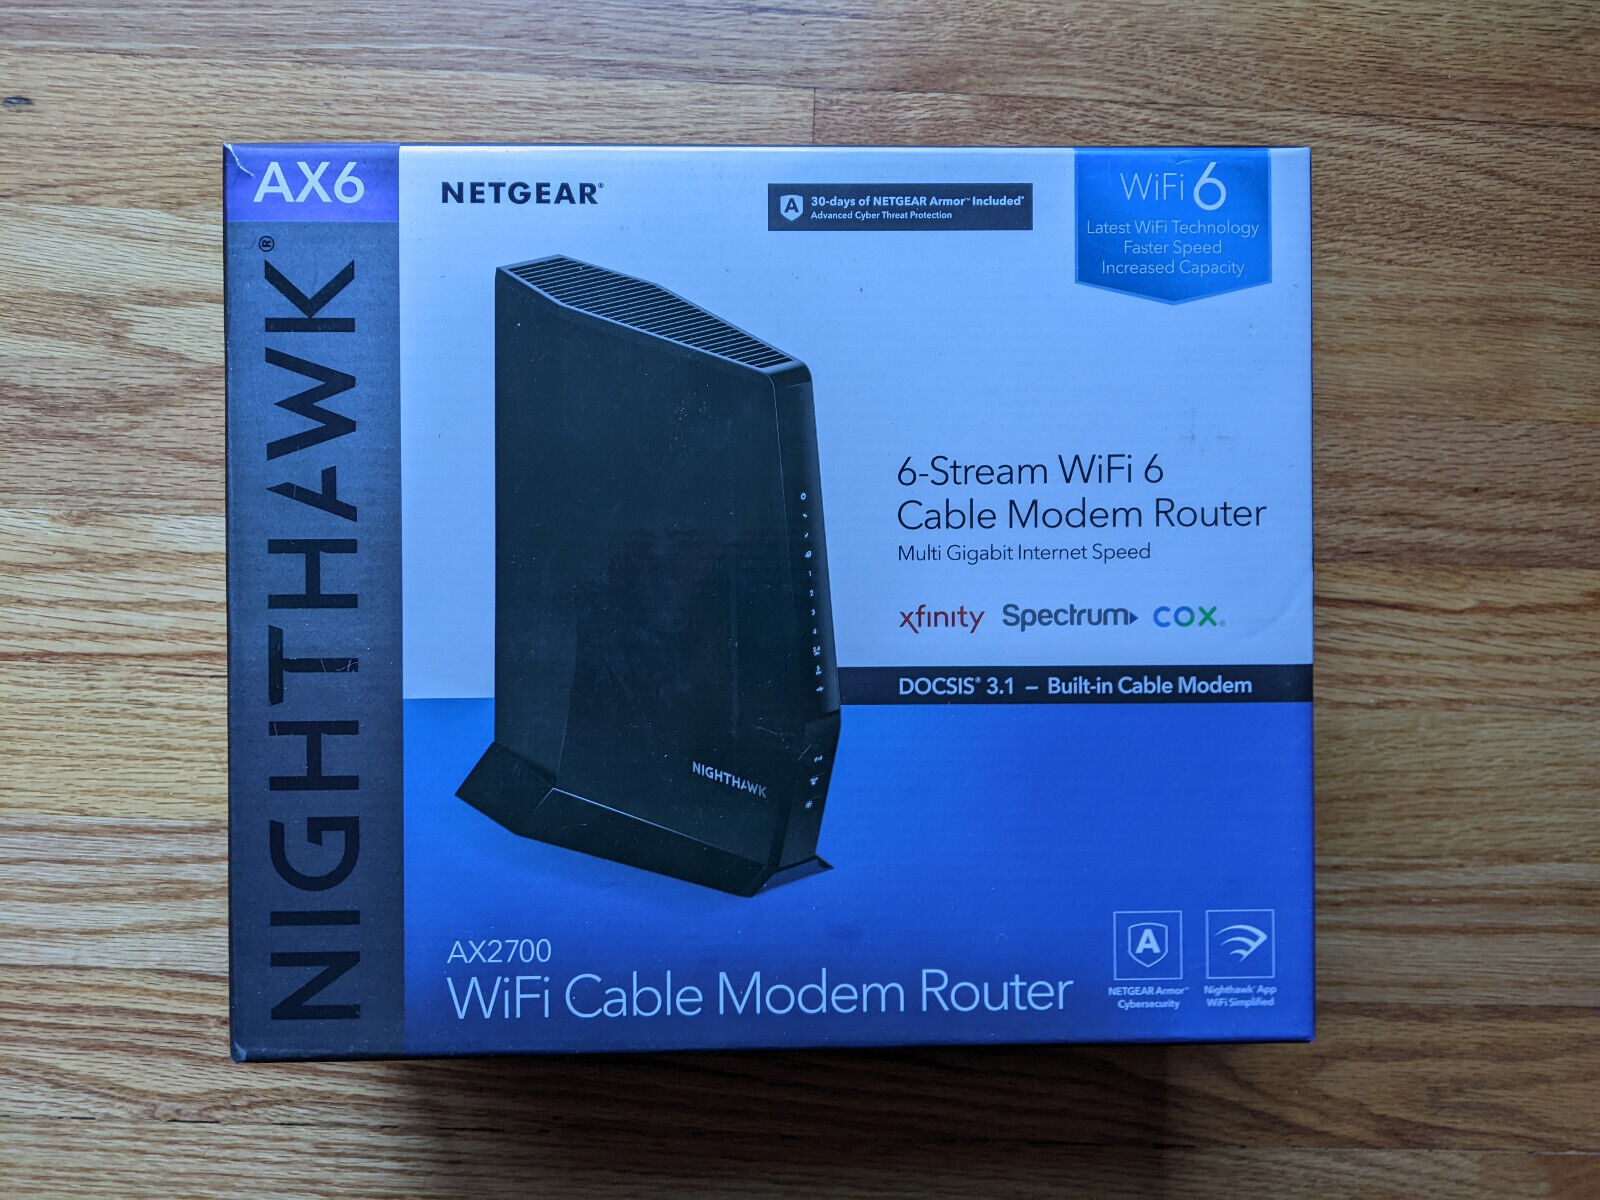 NETGEAR CAX30-100NAR AX2700 Nighthawk DOCSIS 3.1 2.7Gbps WiFi Cable Modem Router